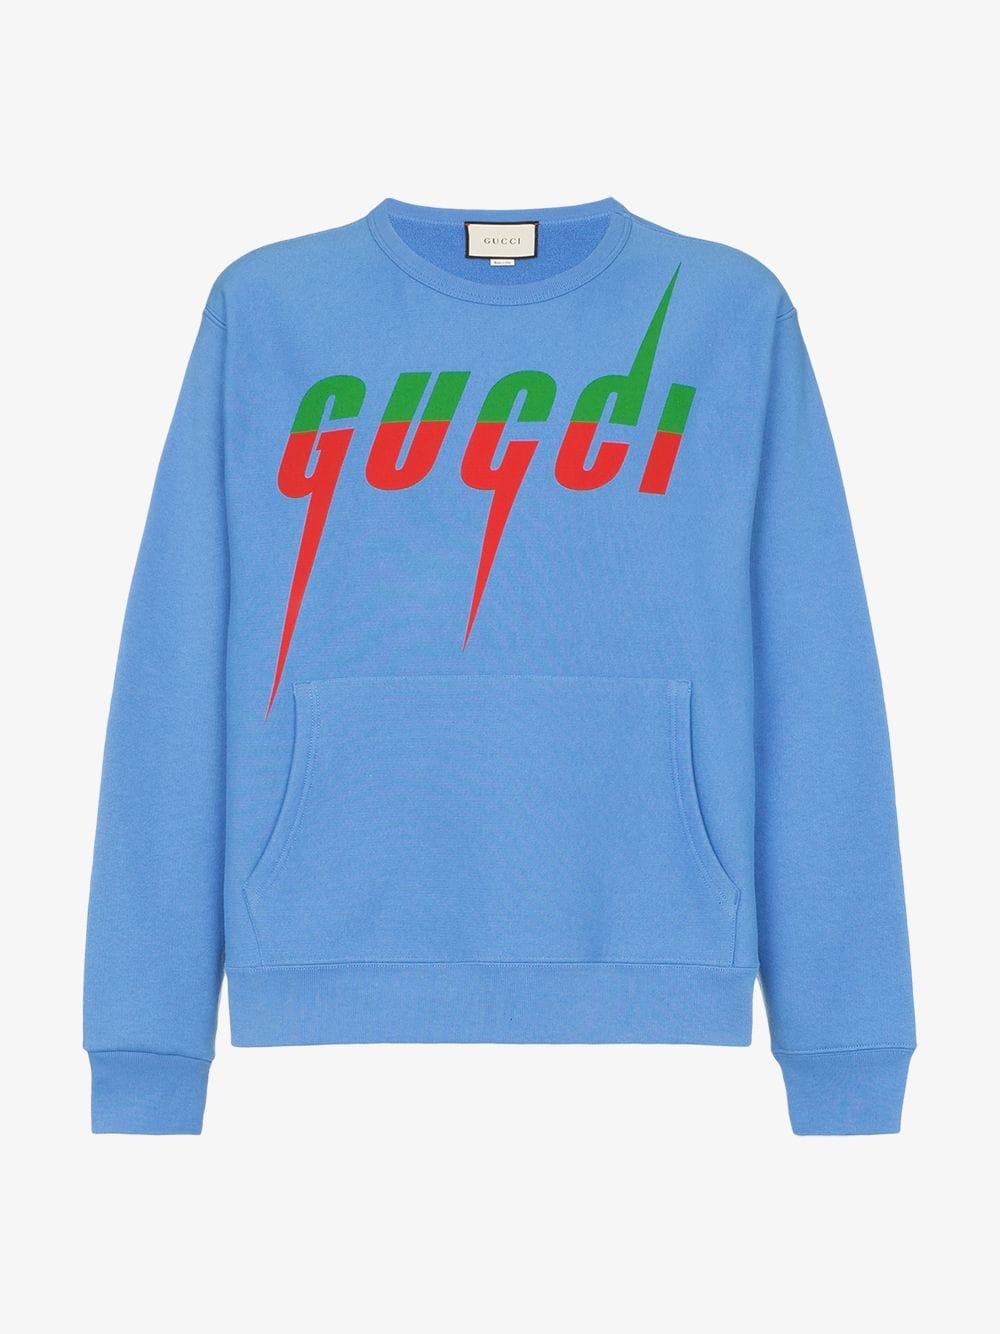 Gucci Blade Logo Print Cotton Jumper in Blue for Men - Lyst